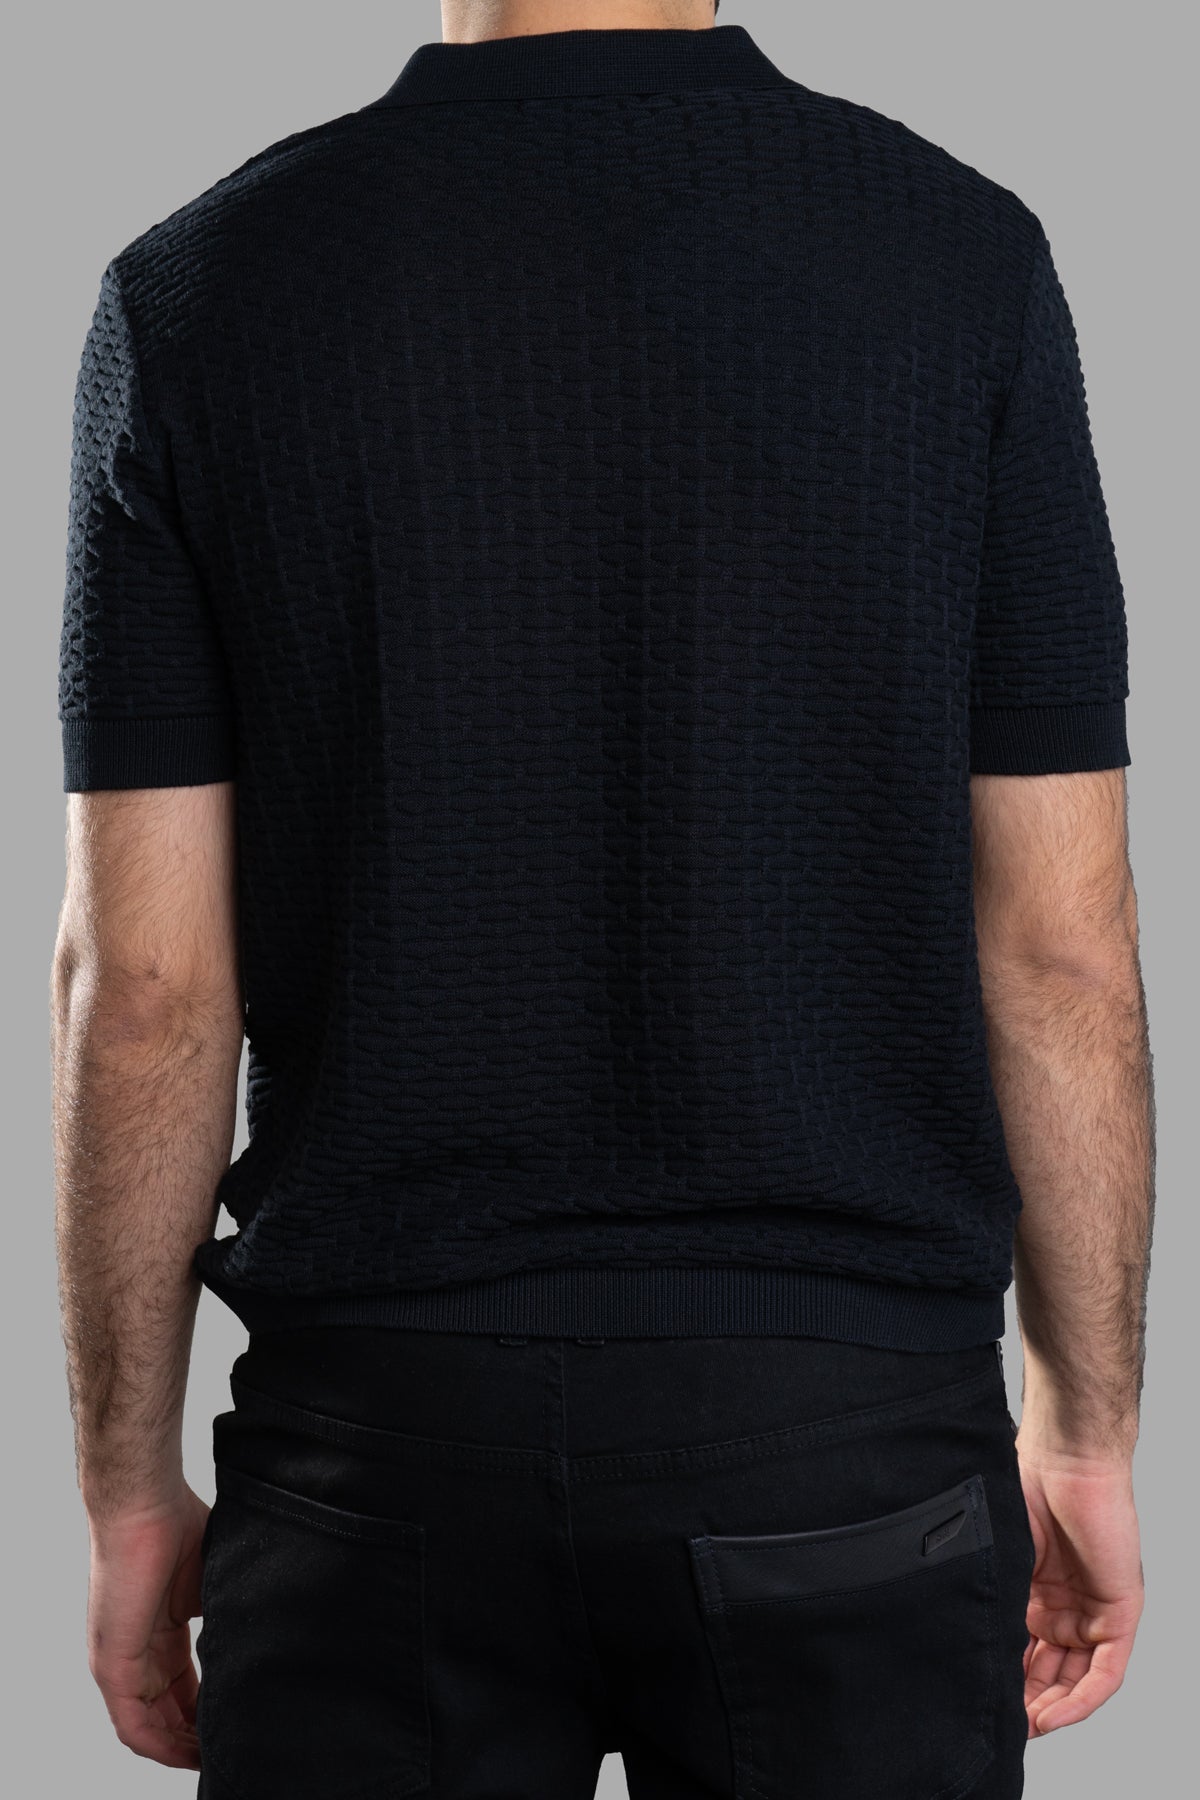 Black Knit Polo Shirt